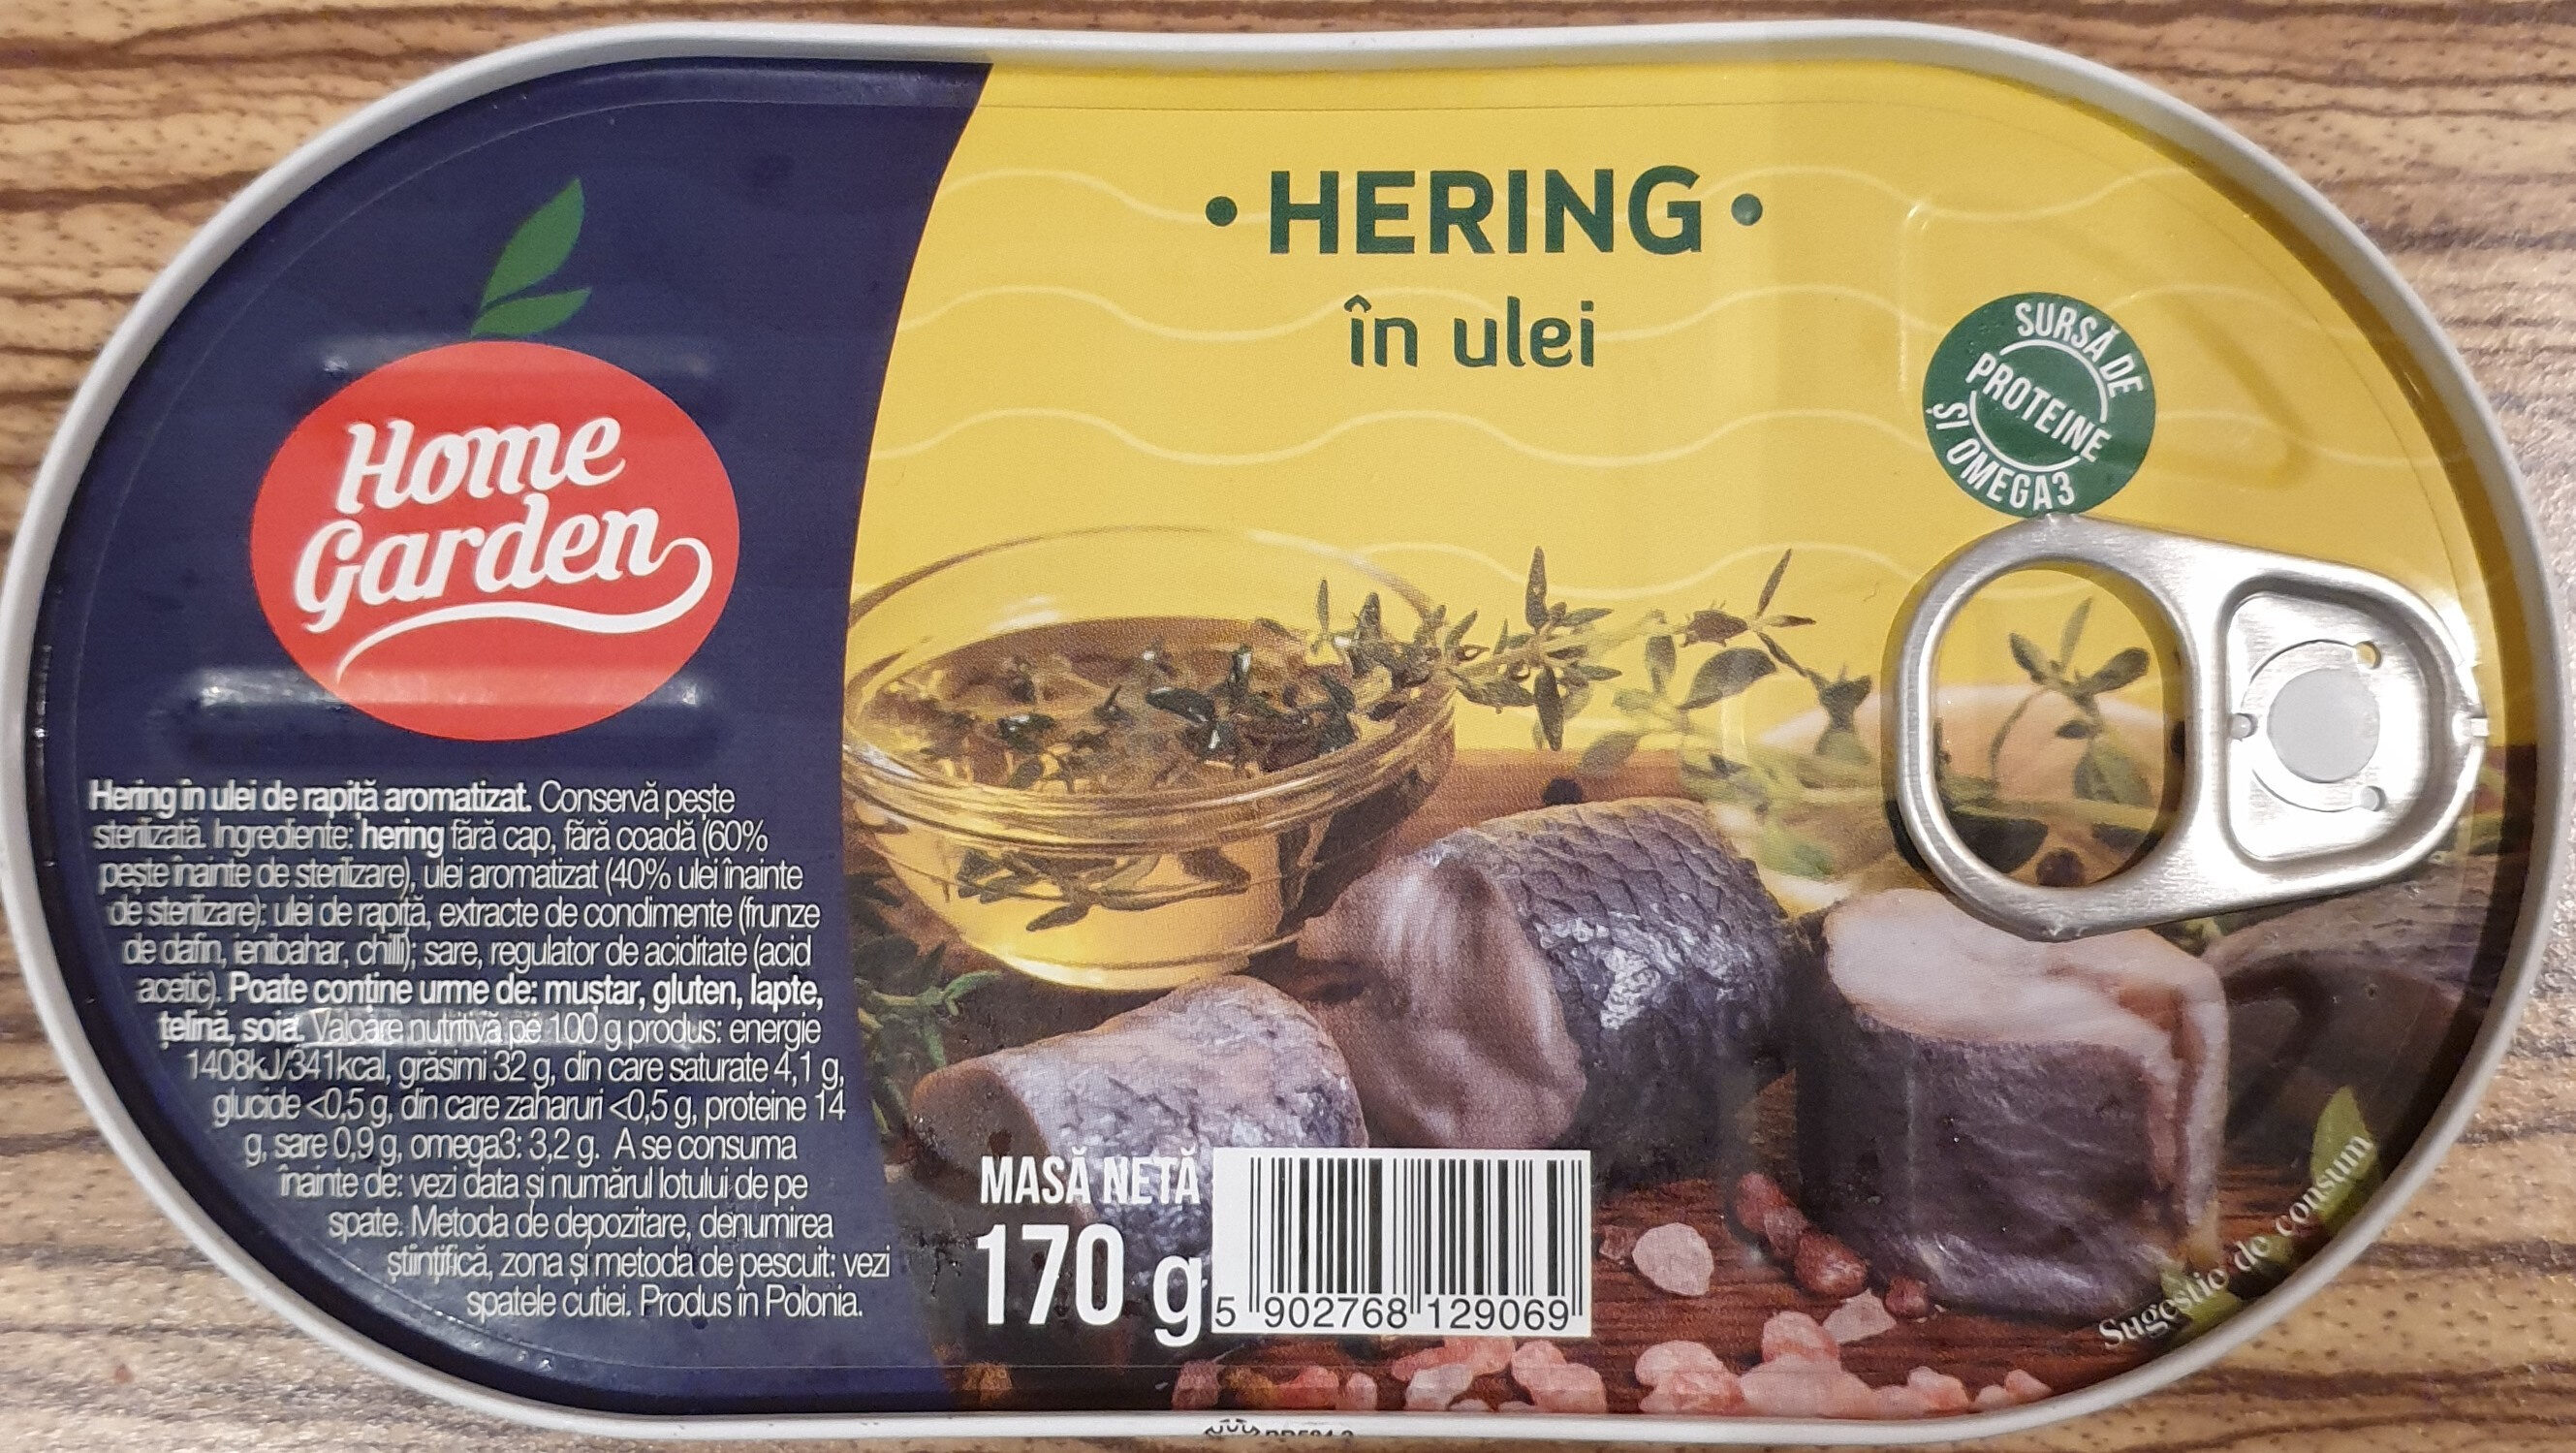 Home Garden Hering in ulei - Product - ro